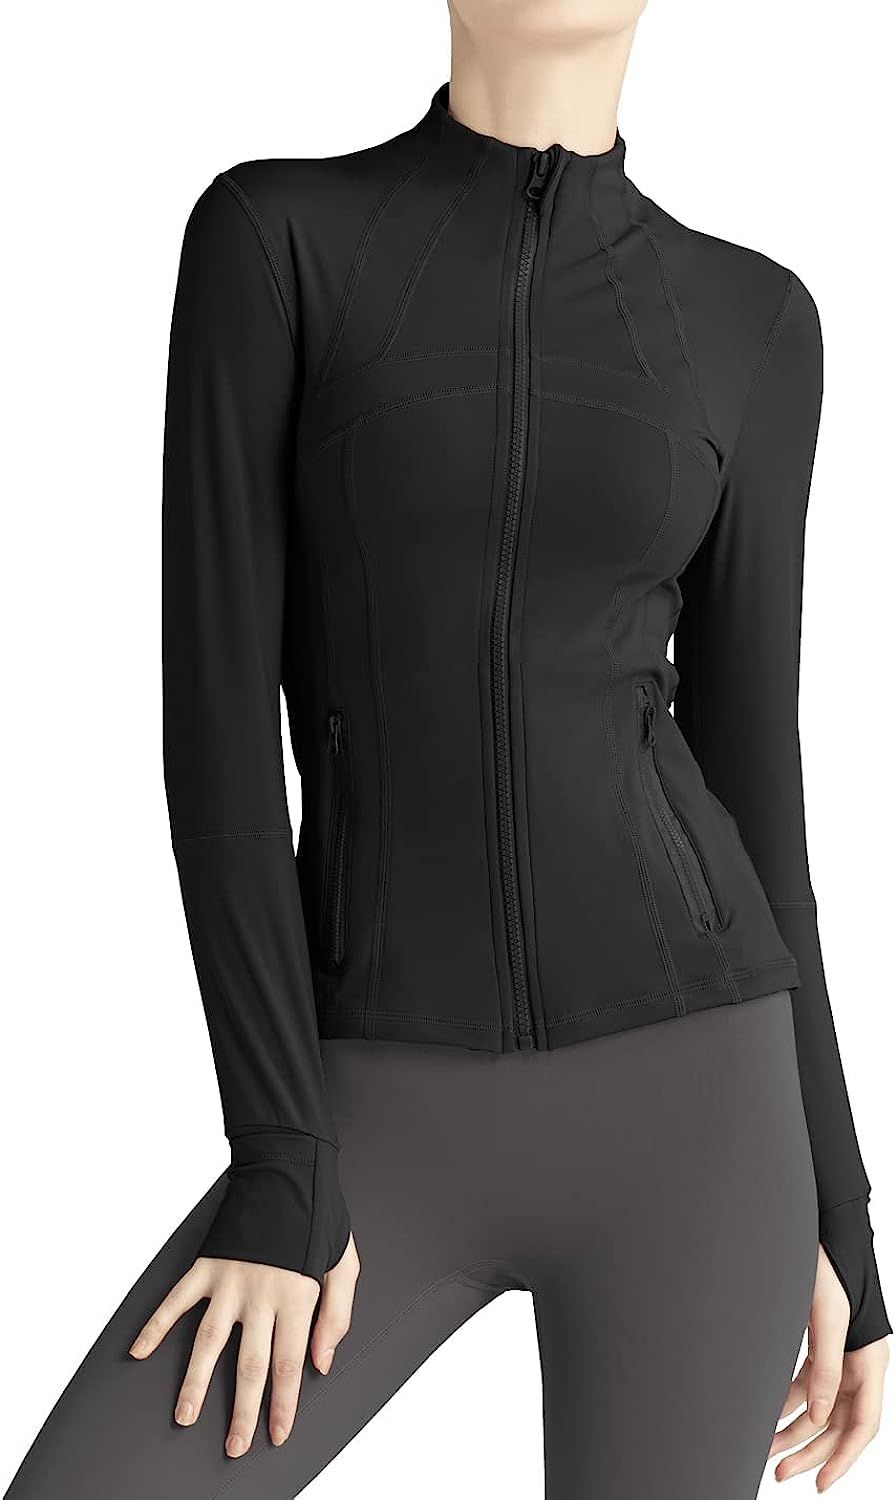 Gacaky Women's Slim Fit Workout Running Track Jackets Full Zip-up Yoga Athletic Jacket with Thumb Ho | Amazon (US)